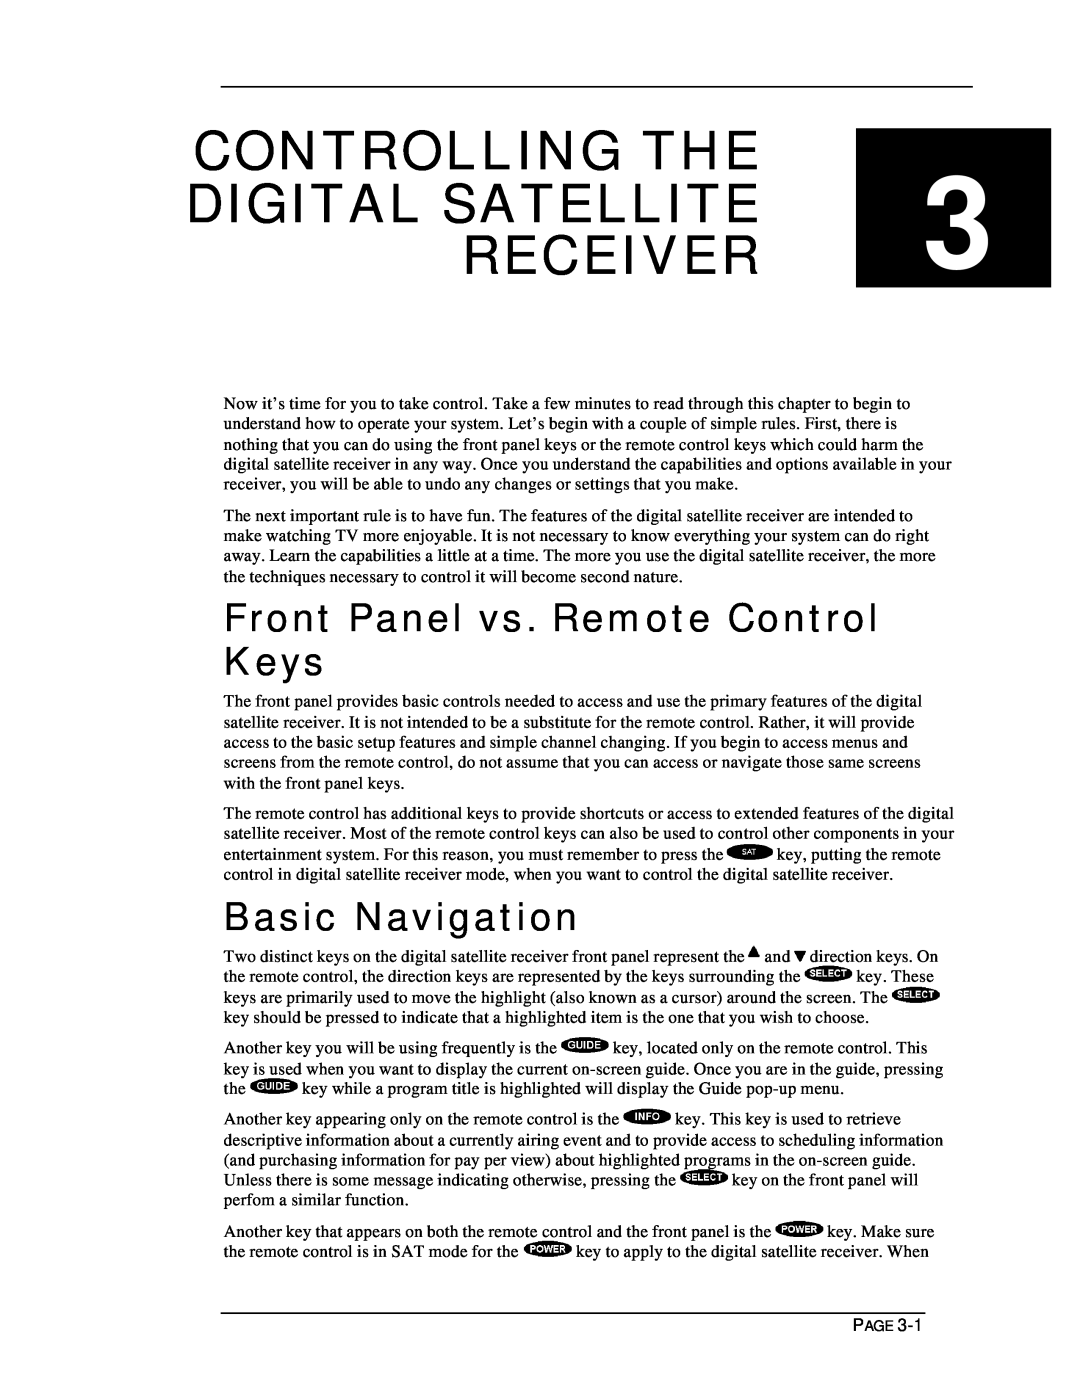 DirecTV HIRD-E11 Controlling The Digital Satellite Receiver, Front Panel vs. Remote Control Keys, Basic Navigation 